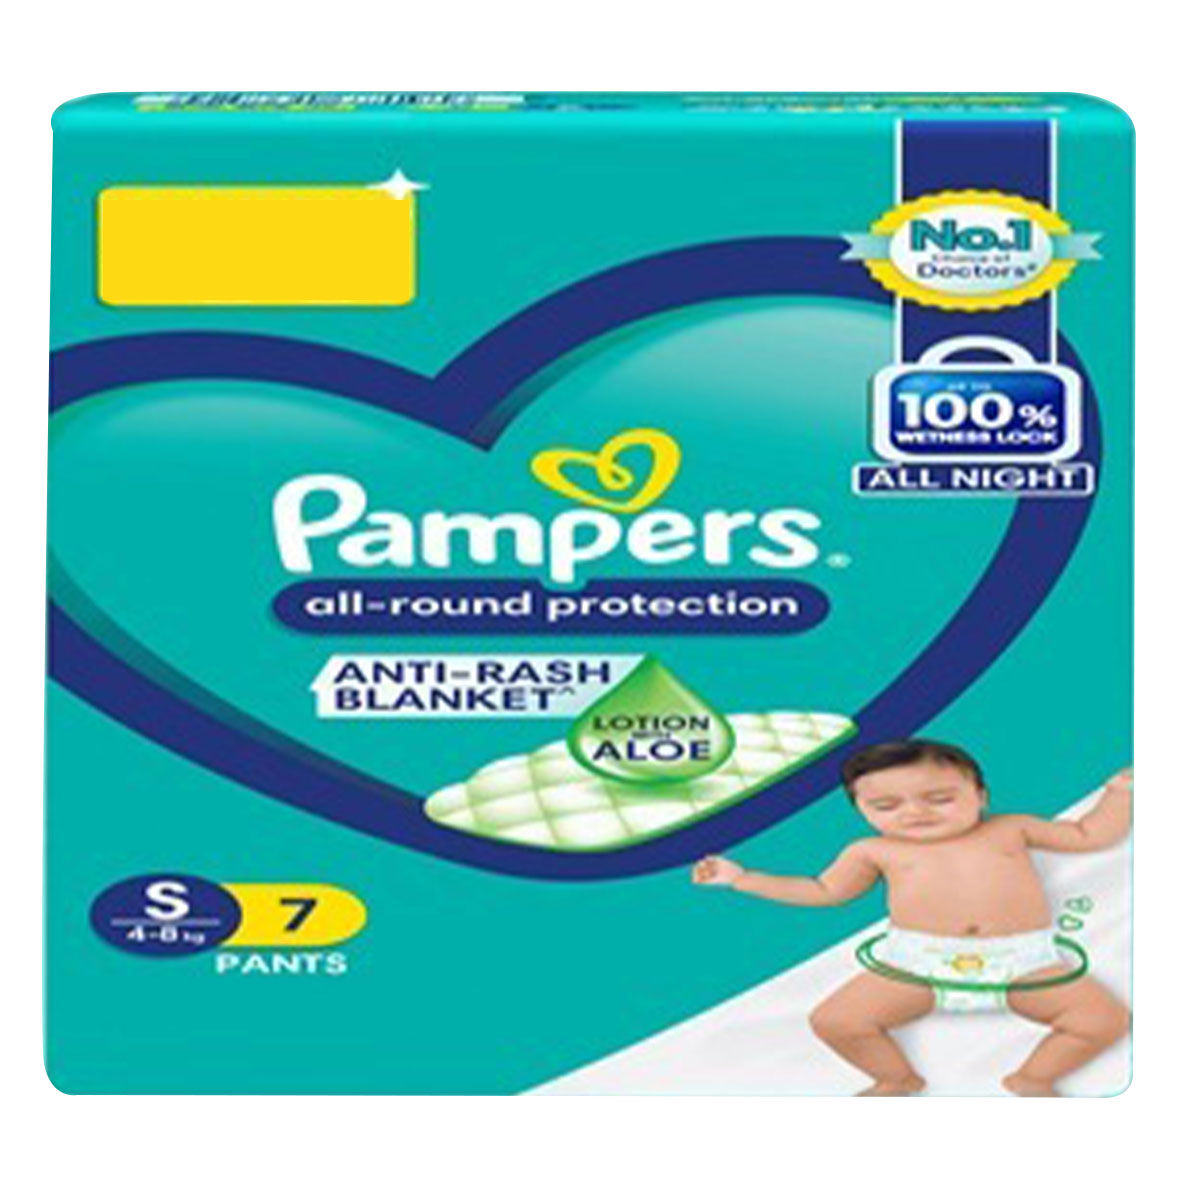 Pampers Diaper Pants, Medium, 8 Count | eBay